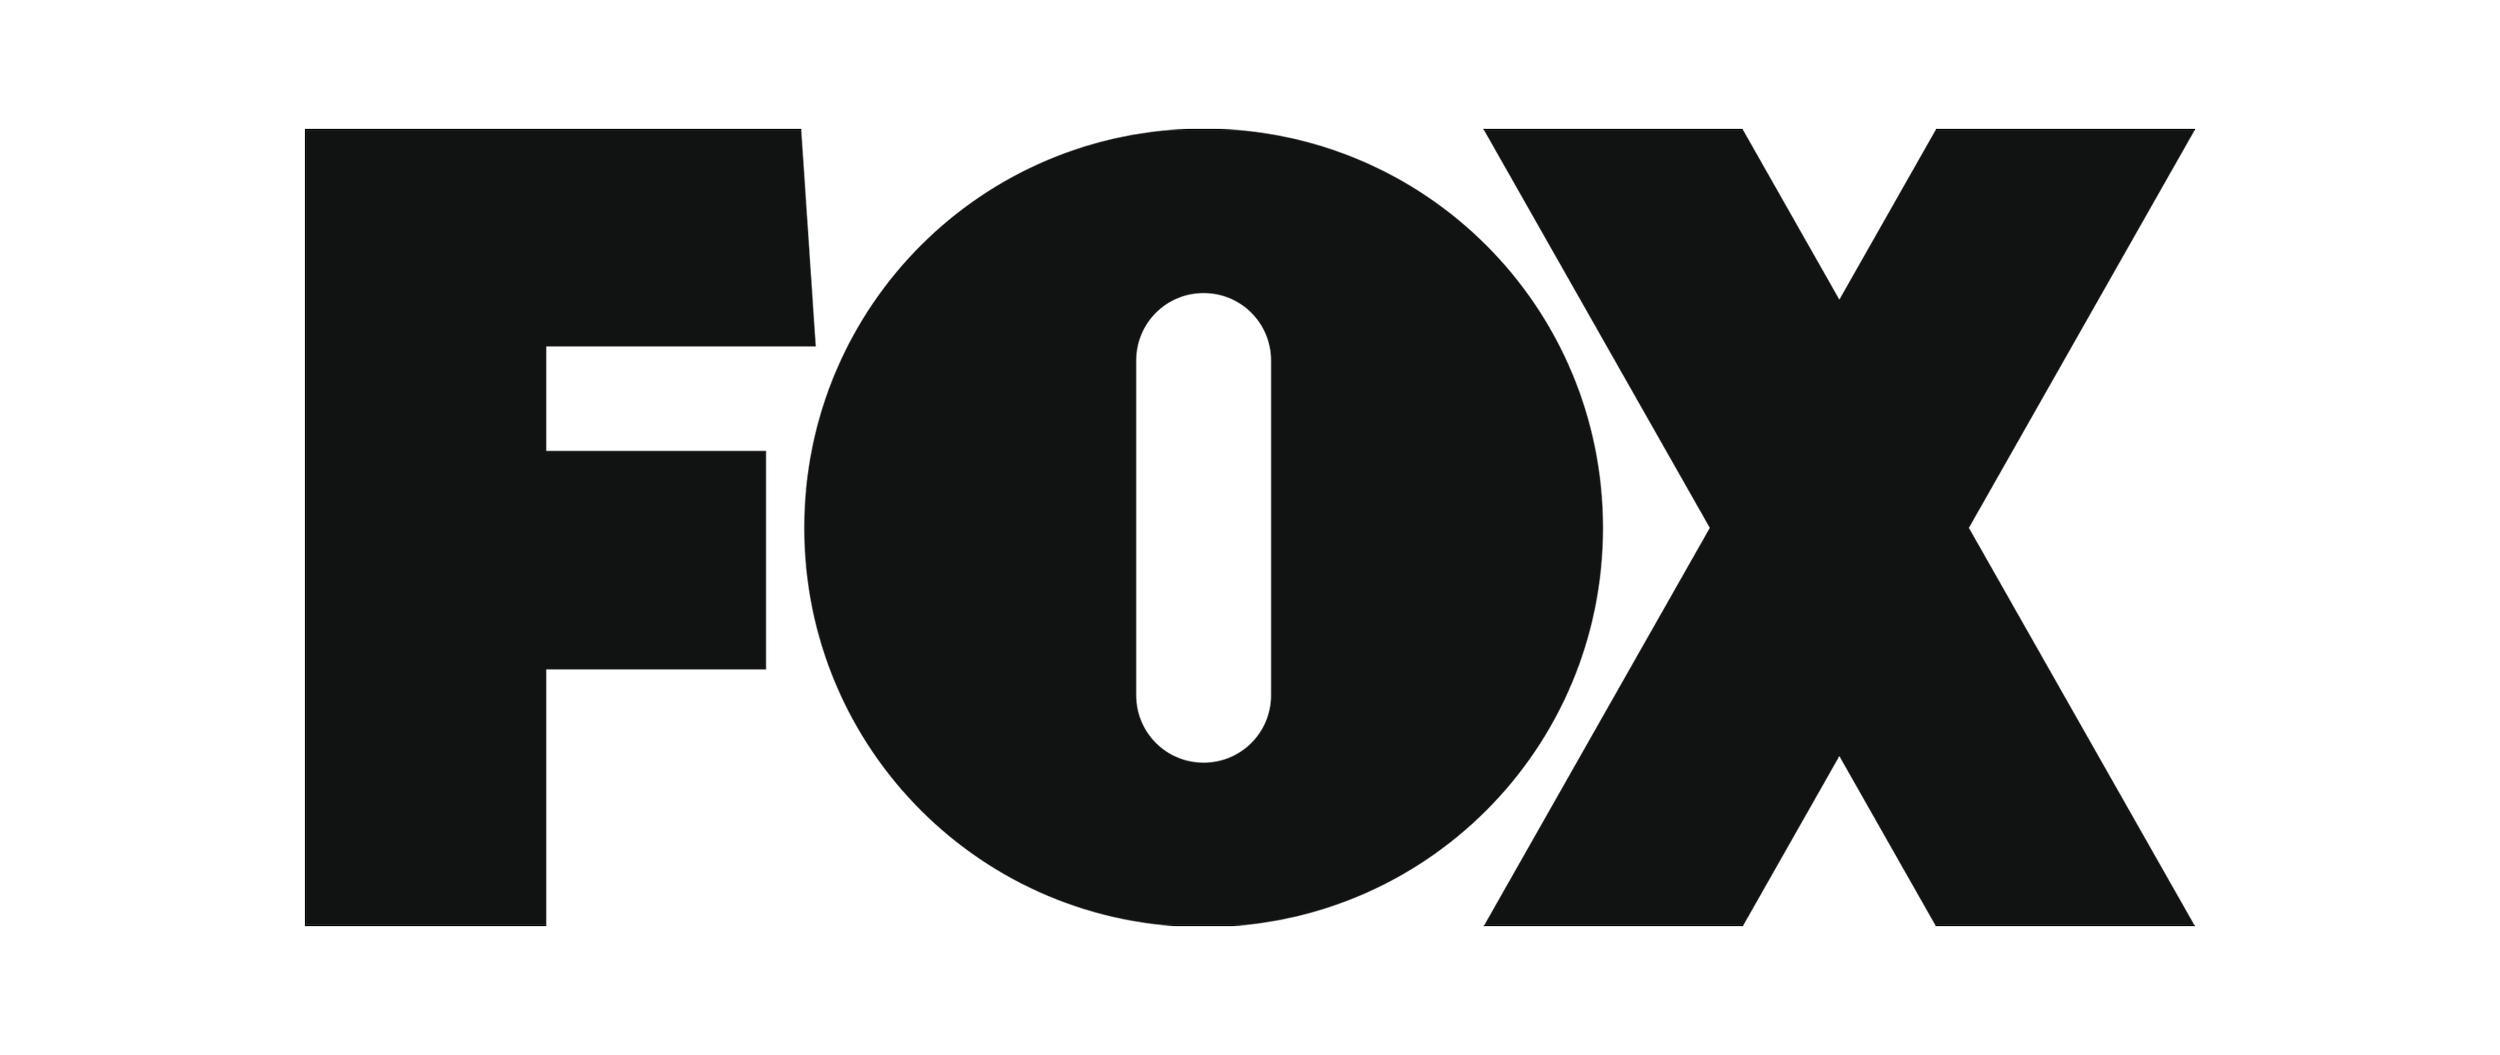 Fox_Broadcasting_Company_logo_(2019)smaller3.png